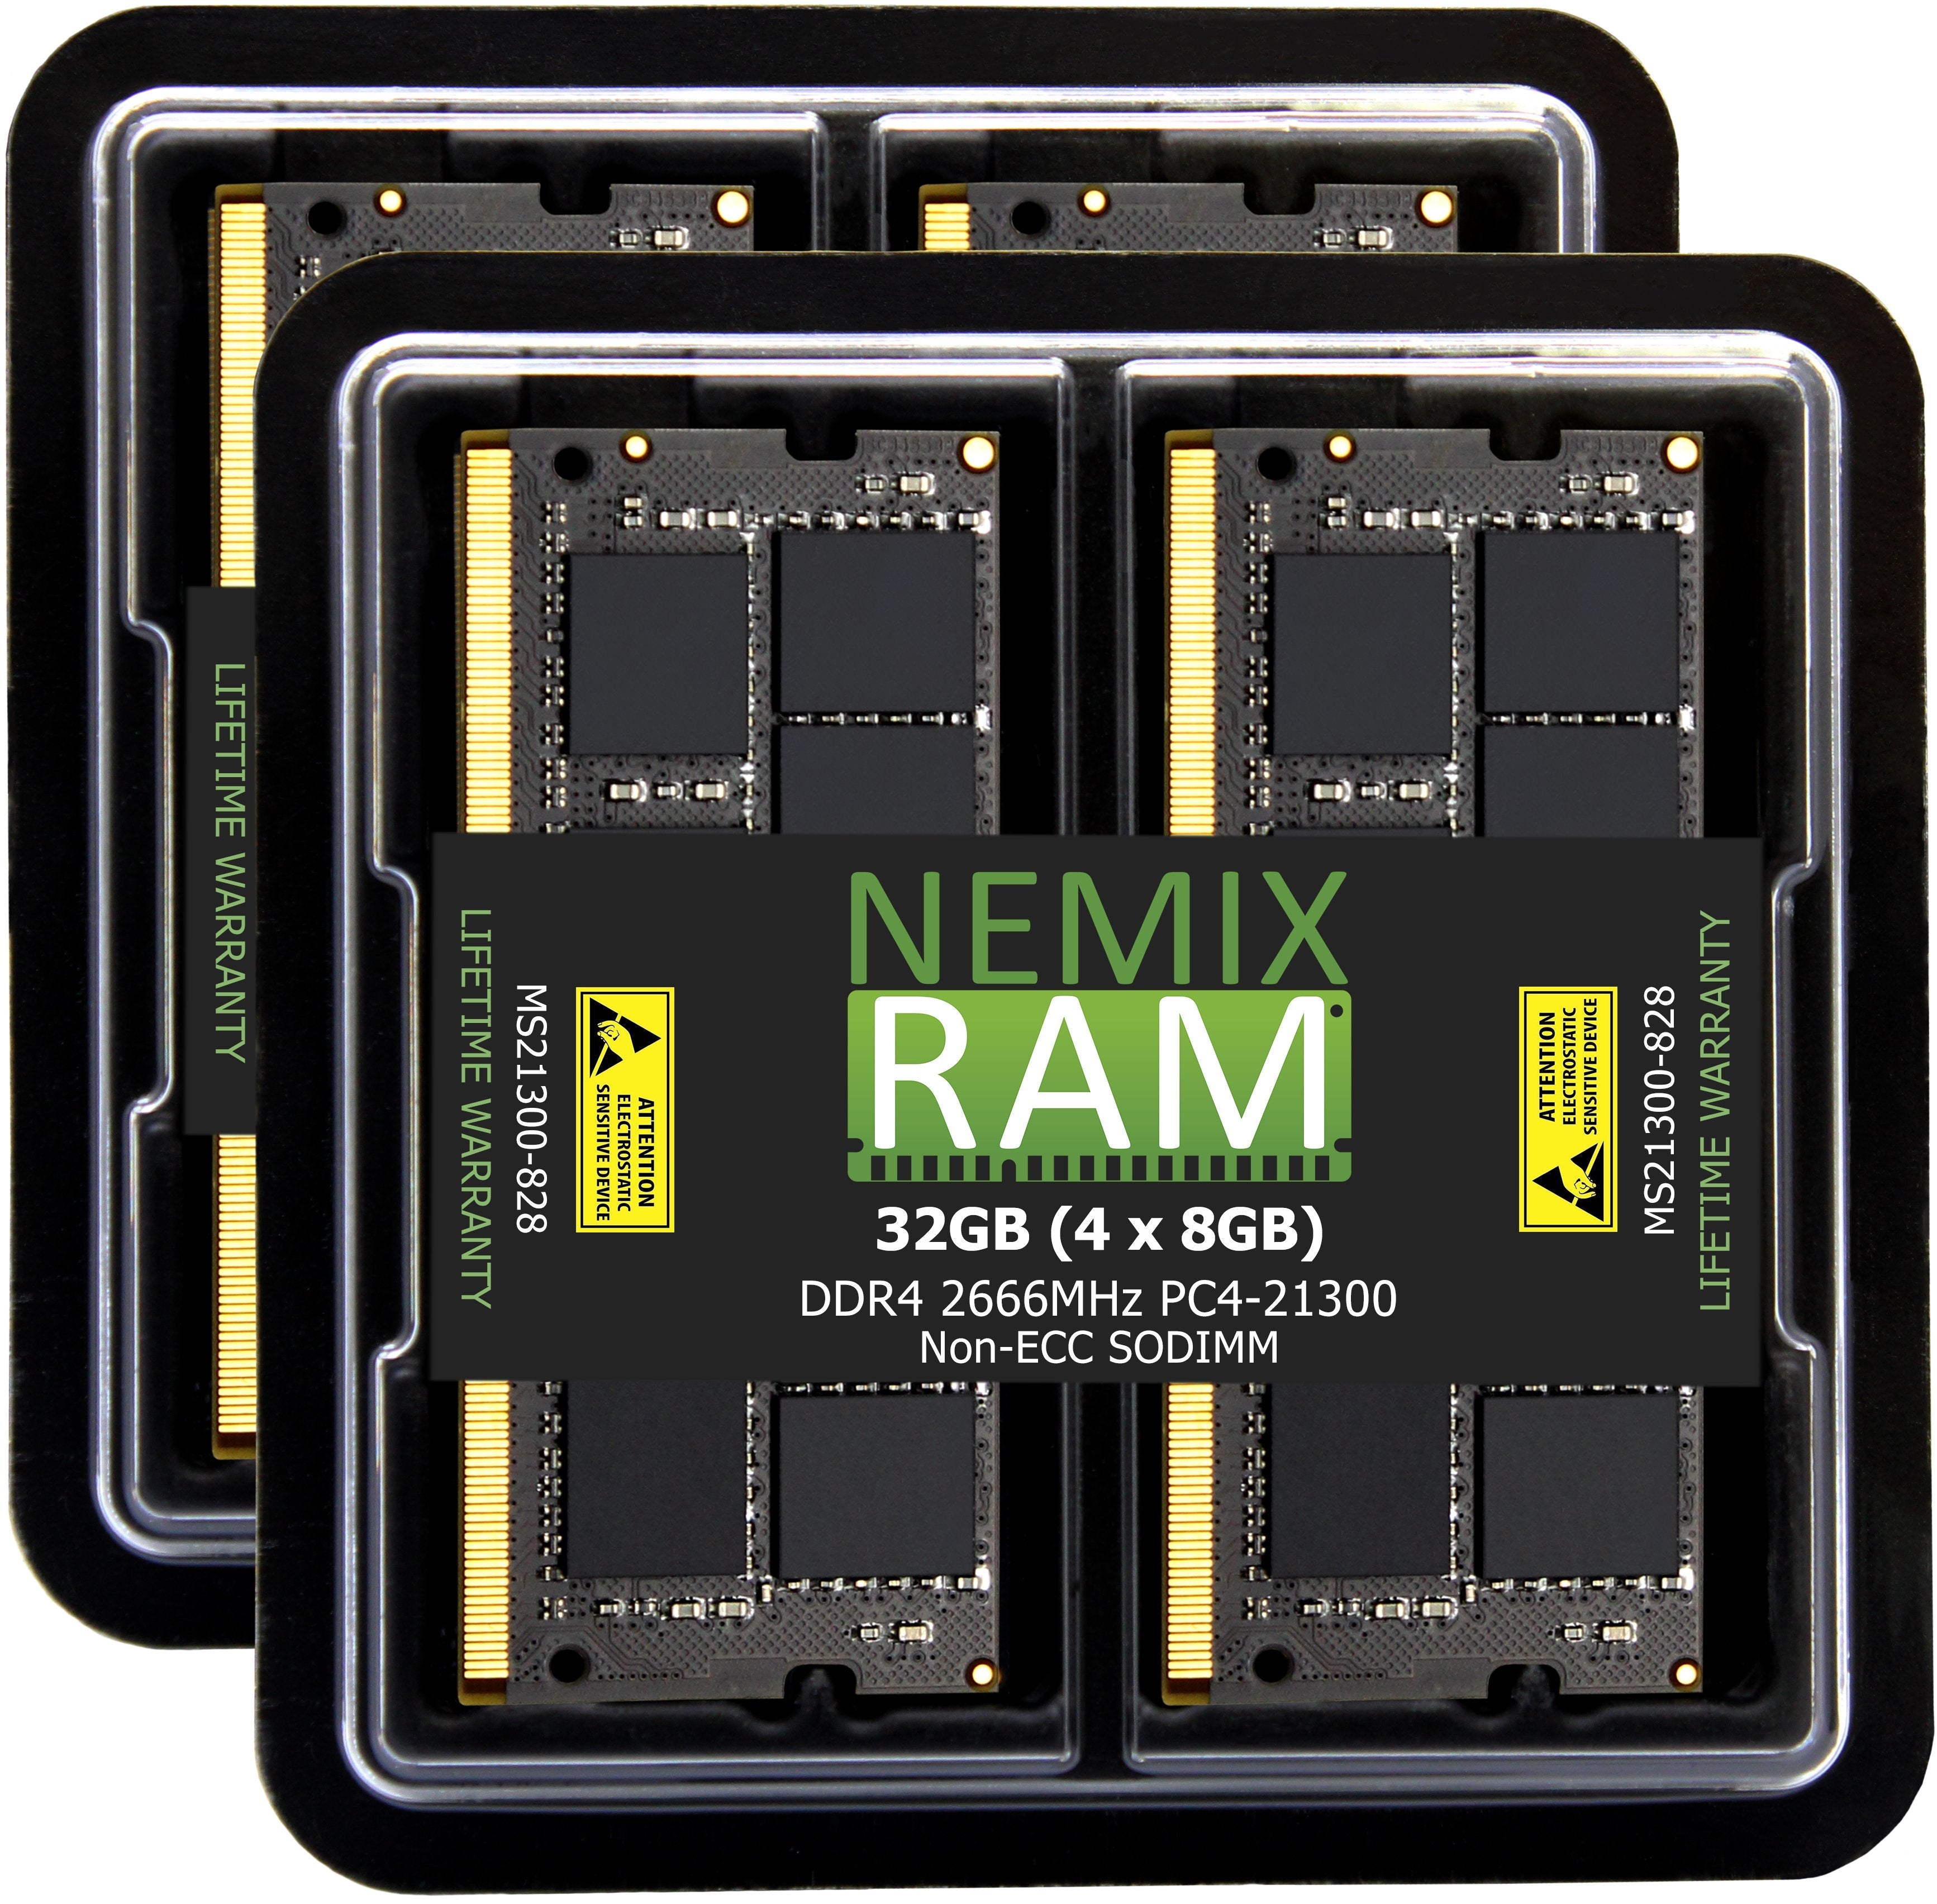 DDR4 2666MHZ PC4-21300 SODIMM 2RX8